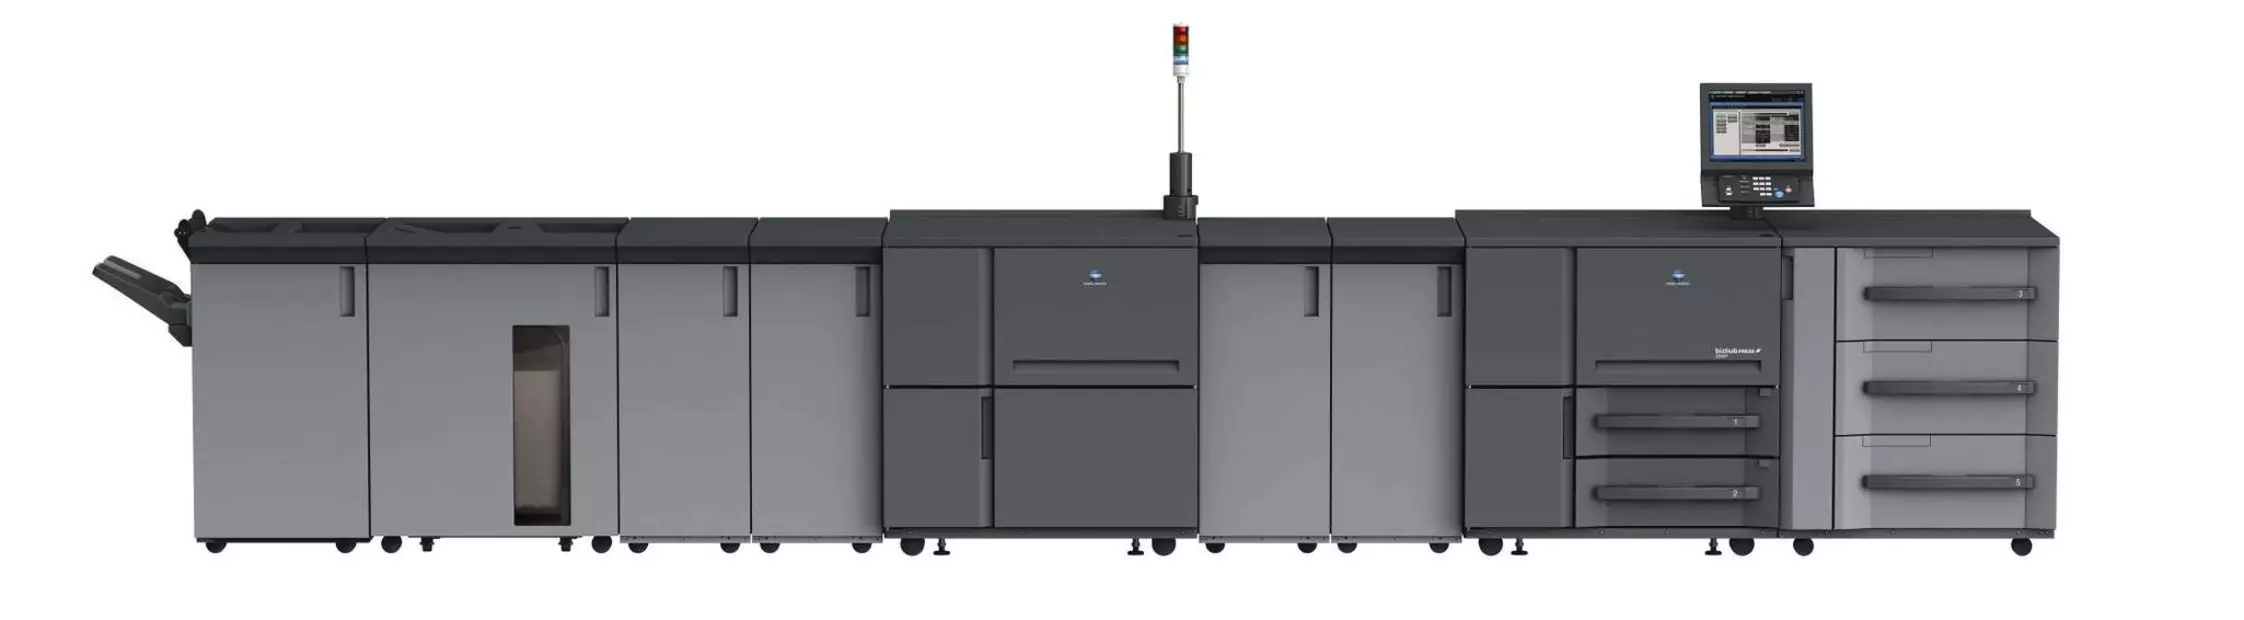 Konica Minolta bizhub PRESS 2250p professionel printer